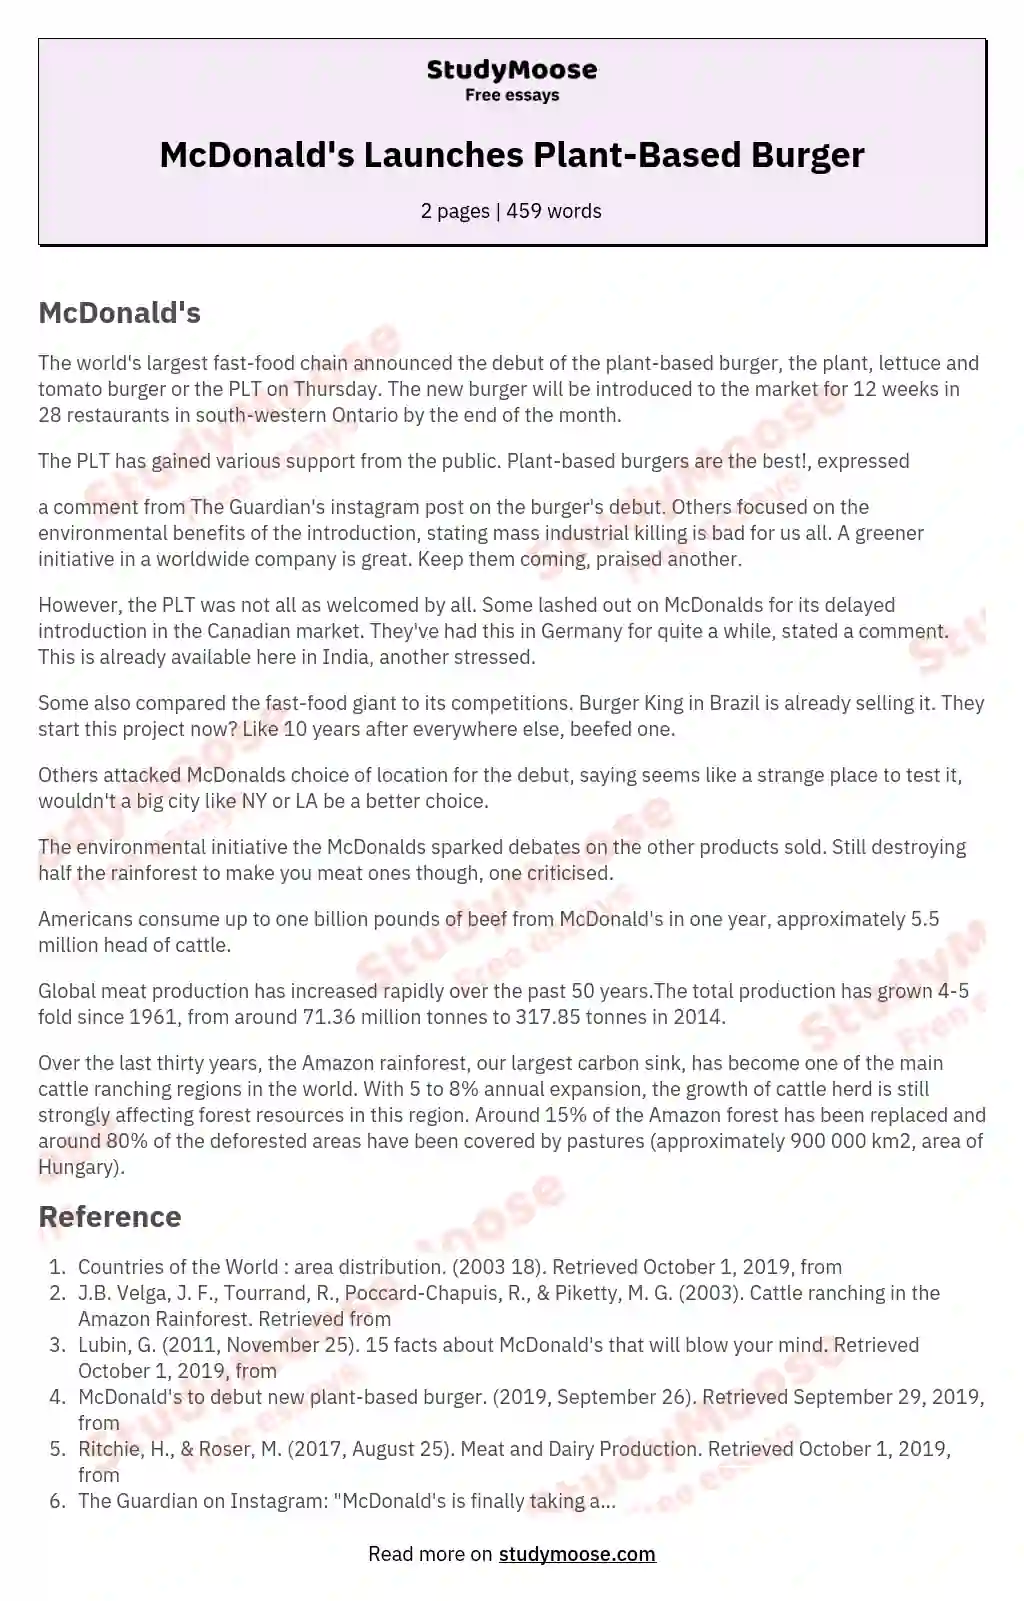 McDonald's Launches Plant-Based Burger essay